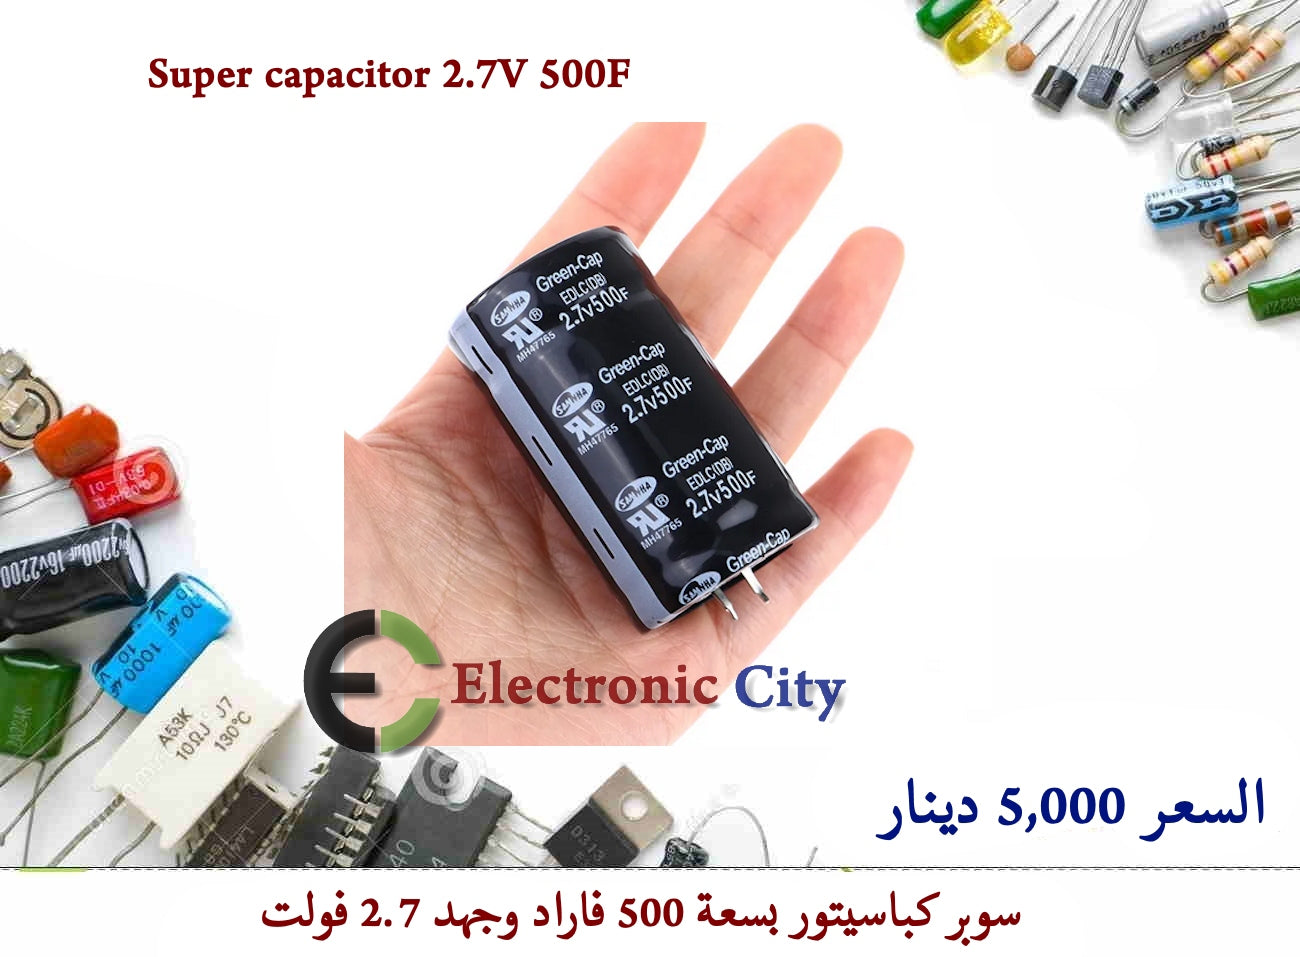 Super capacitor 2.7V 500F